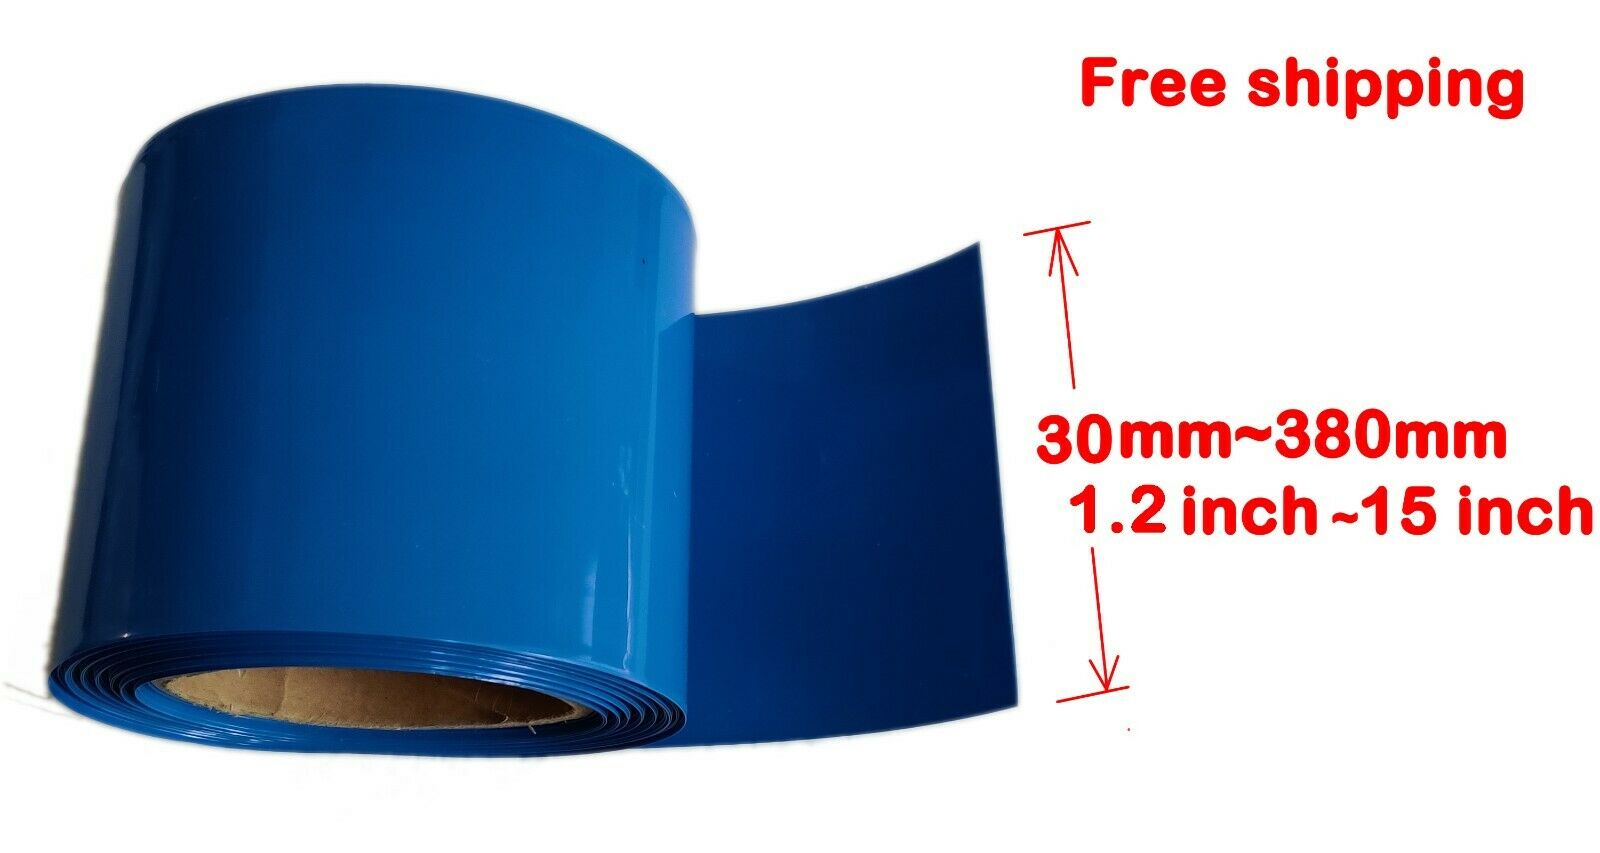 Blue Pvc Heat Shrink Wrap For Battery Packs Width 30mm-380mm (3 Ft)